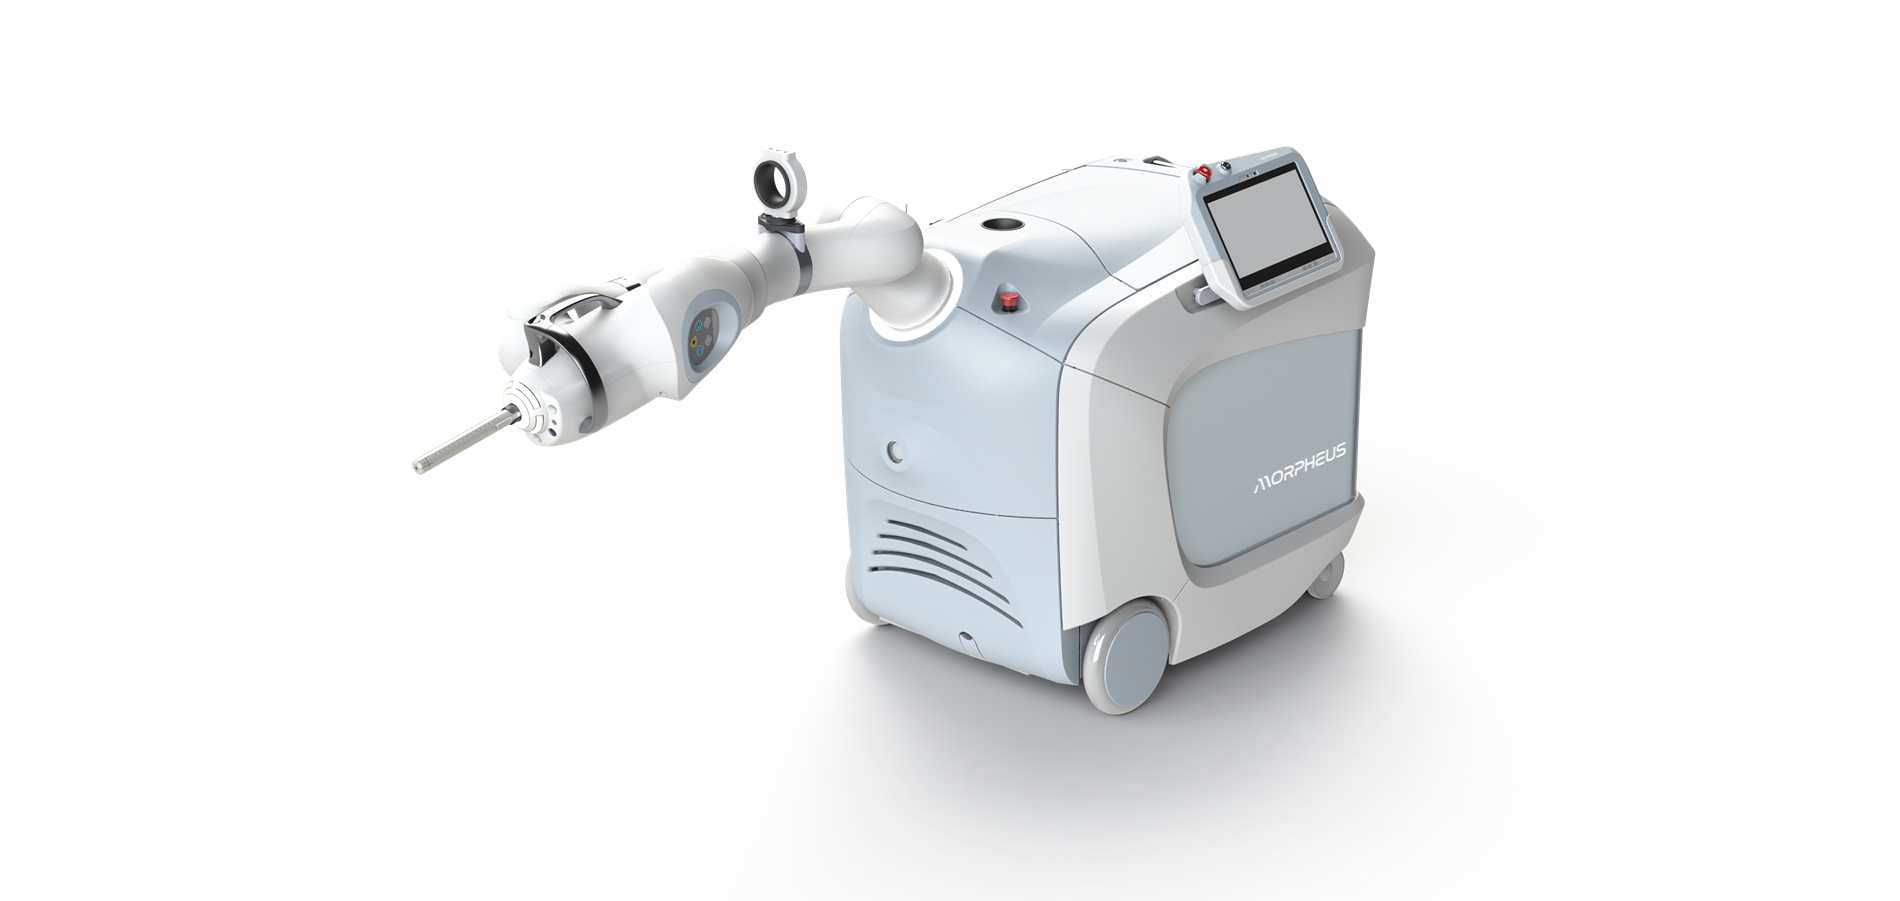 Strahlentherapie-Roboter Morpheus von Empyrean Medical Systems